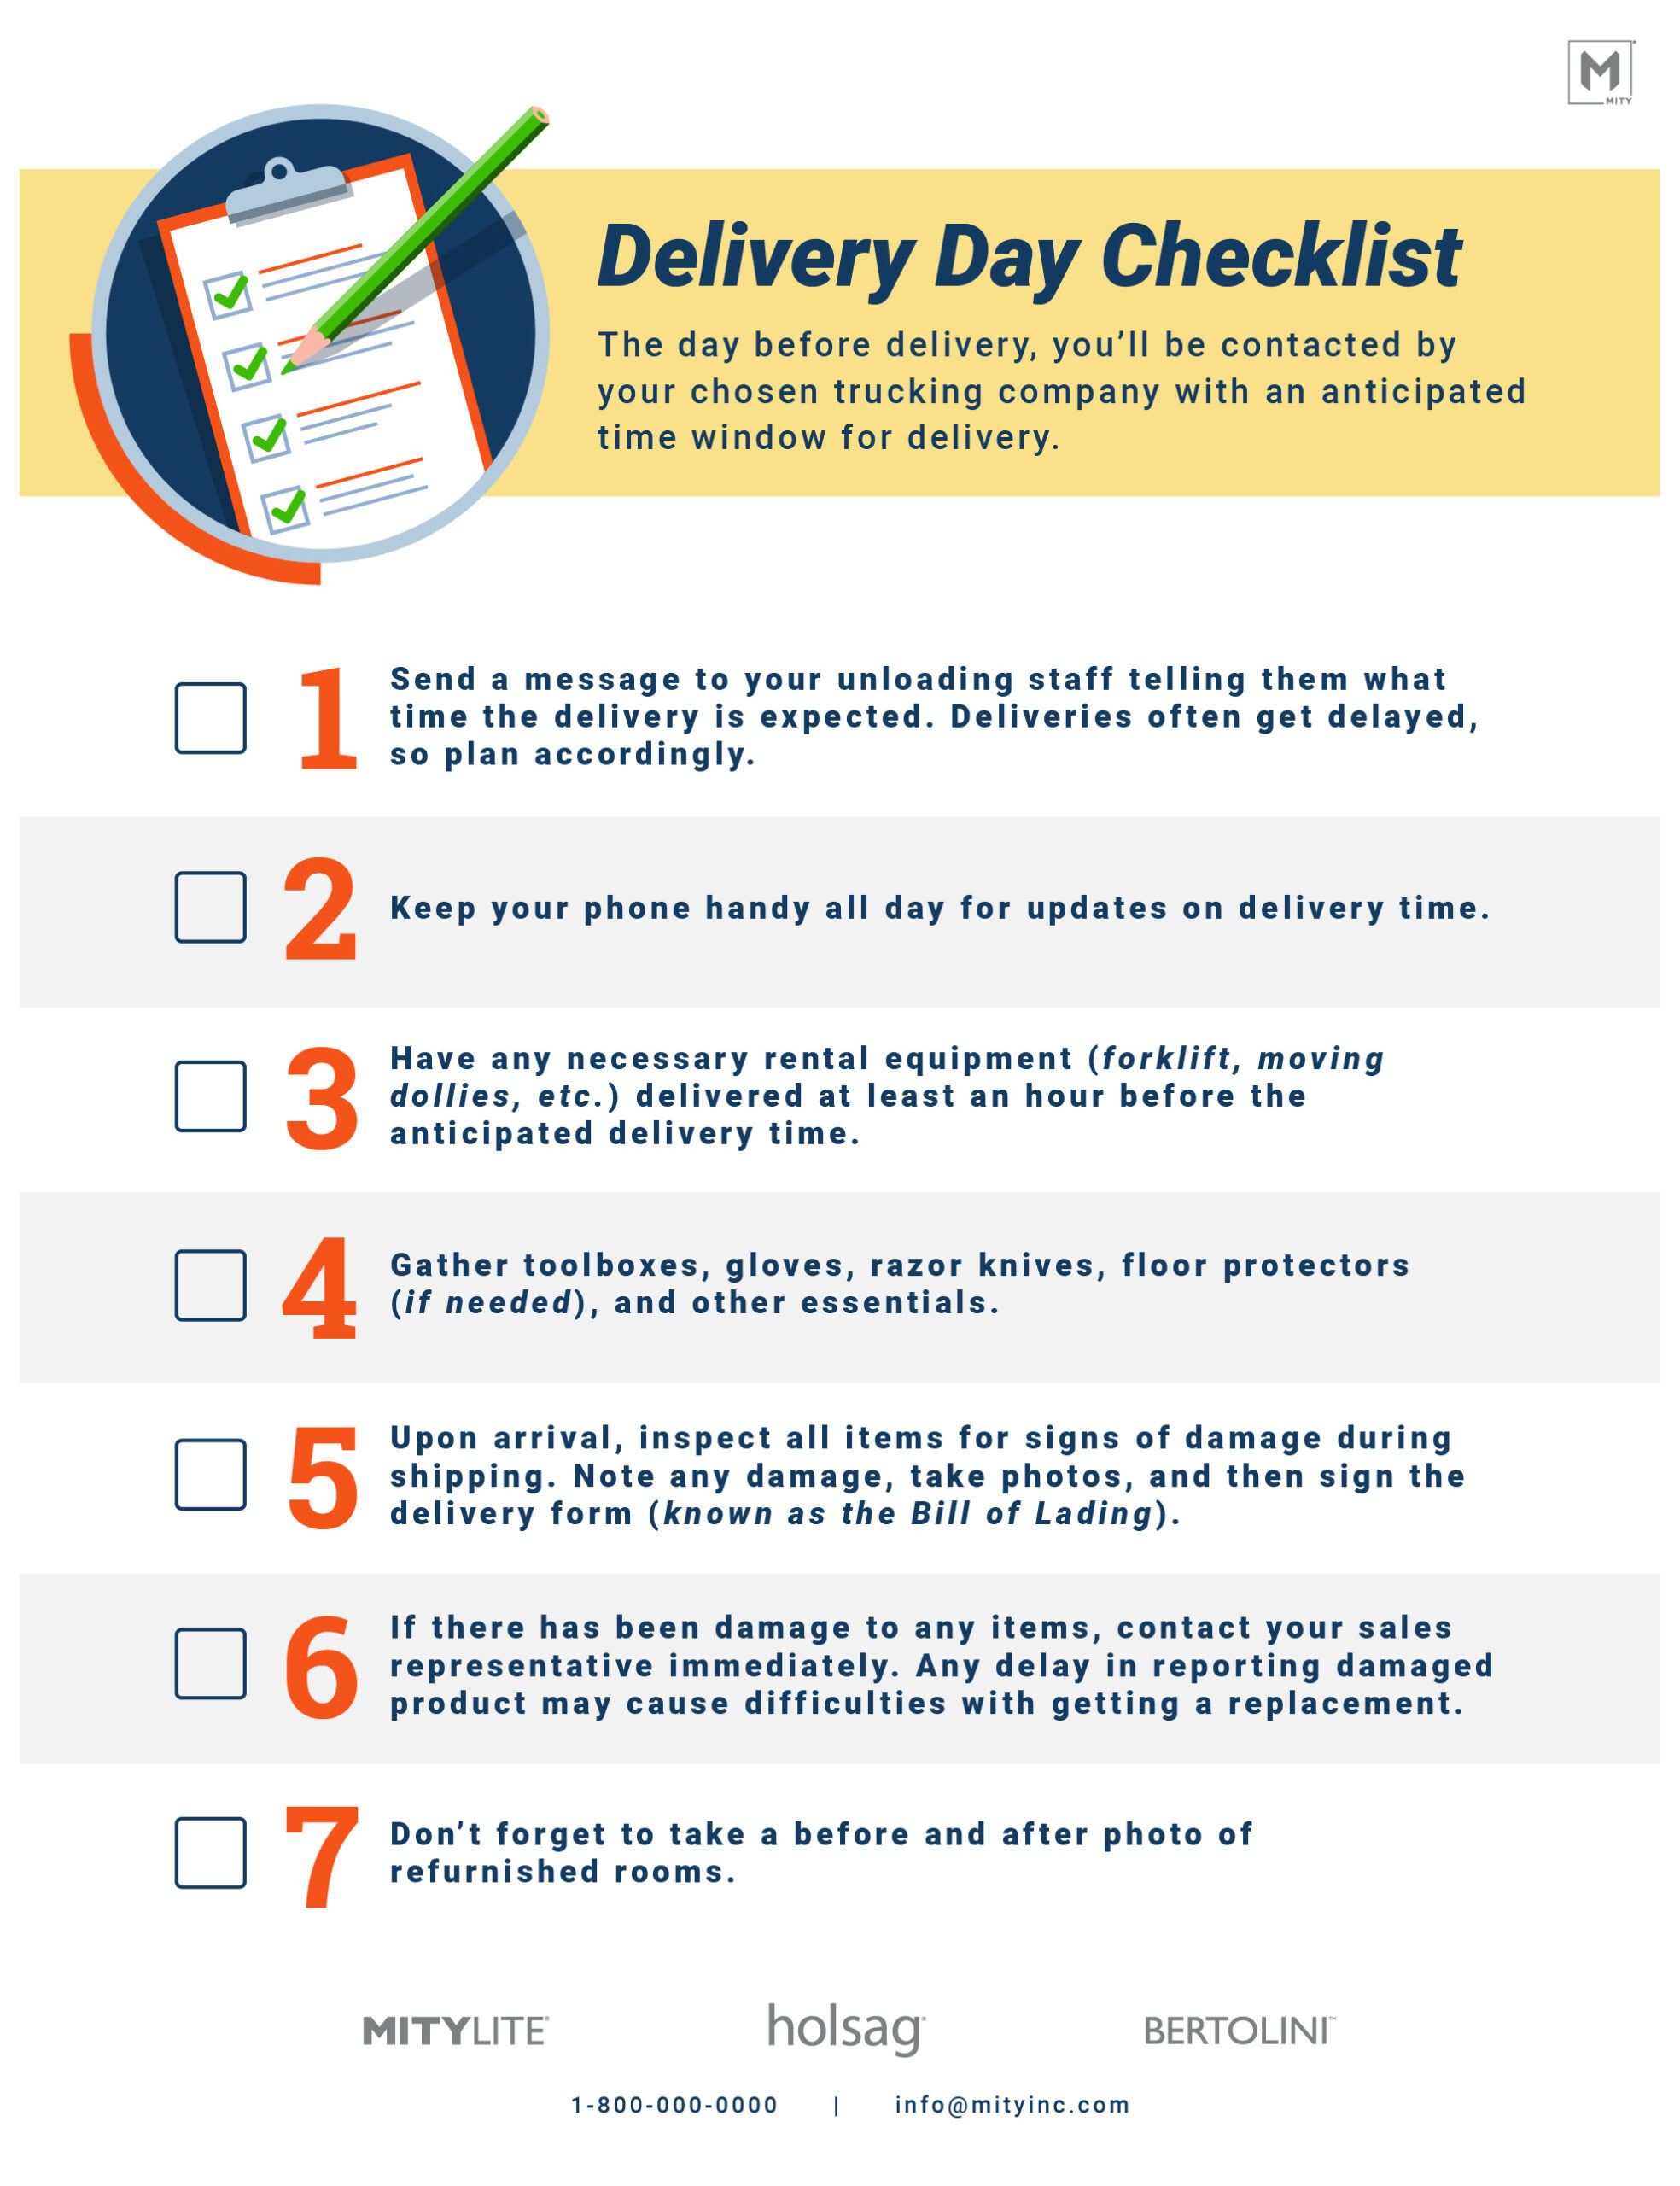 MITY Delivery Day Checklist